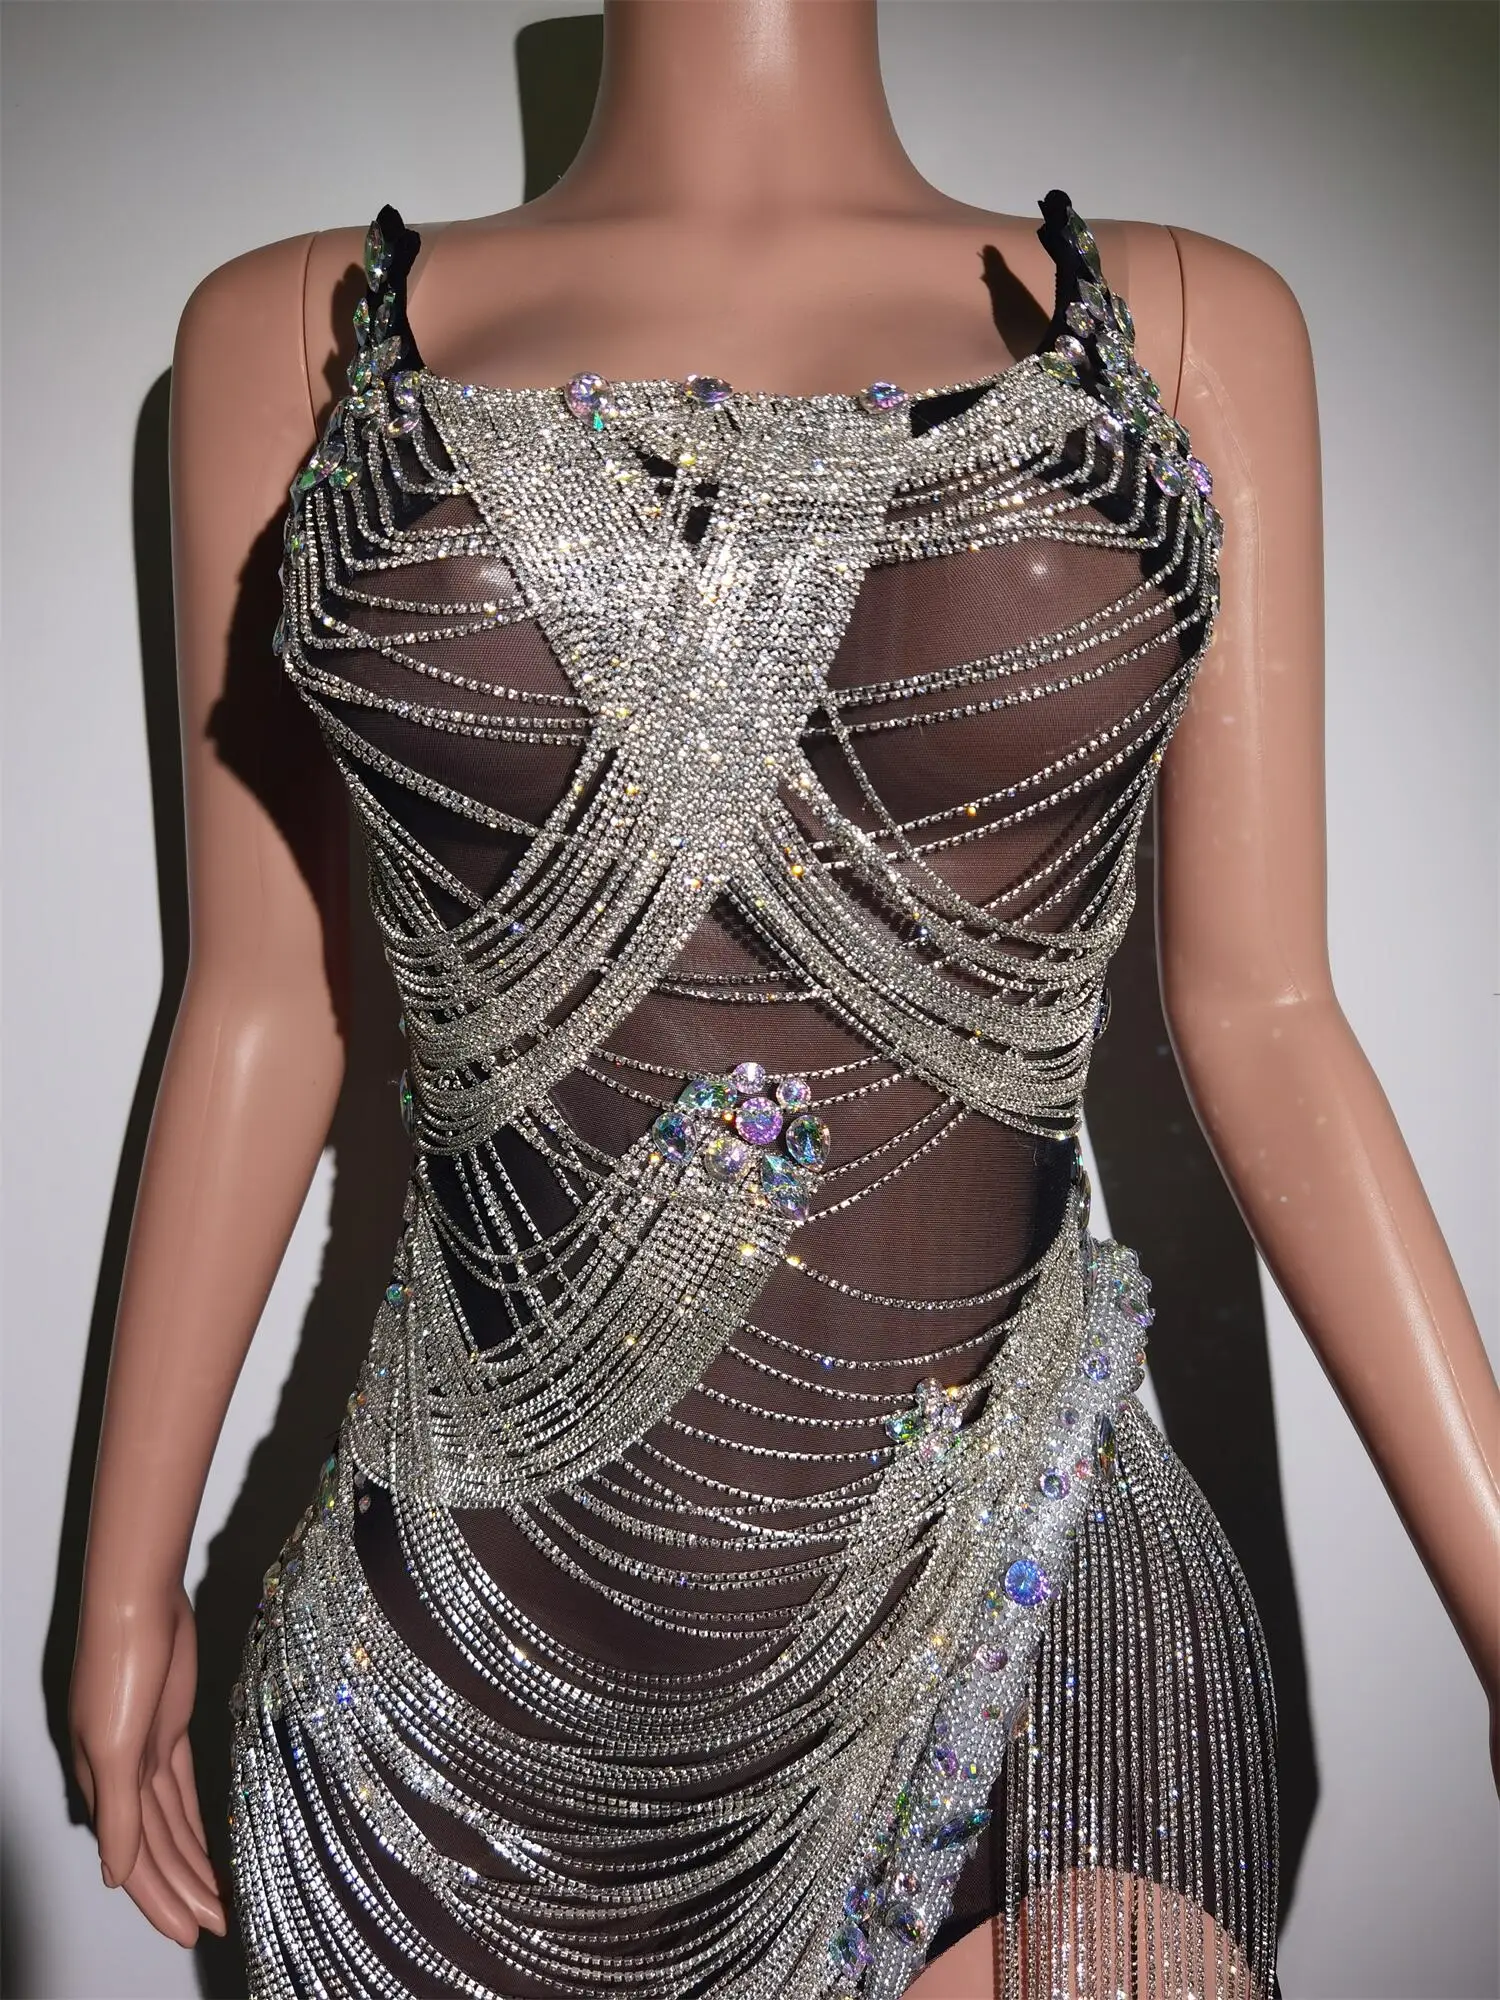 Fashion Celebrate Bling Diamond Long Dress Bra Crystal Hot Girls In Dresses  Nightclub Bar Rave Party Costume Night Out Dress - AliExpress